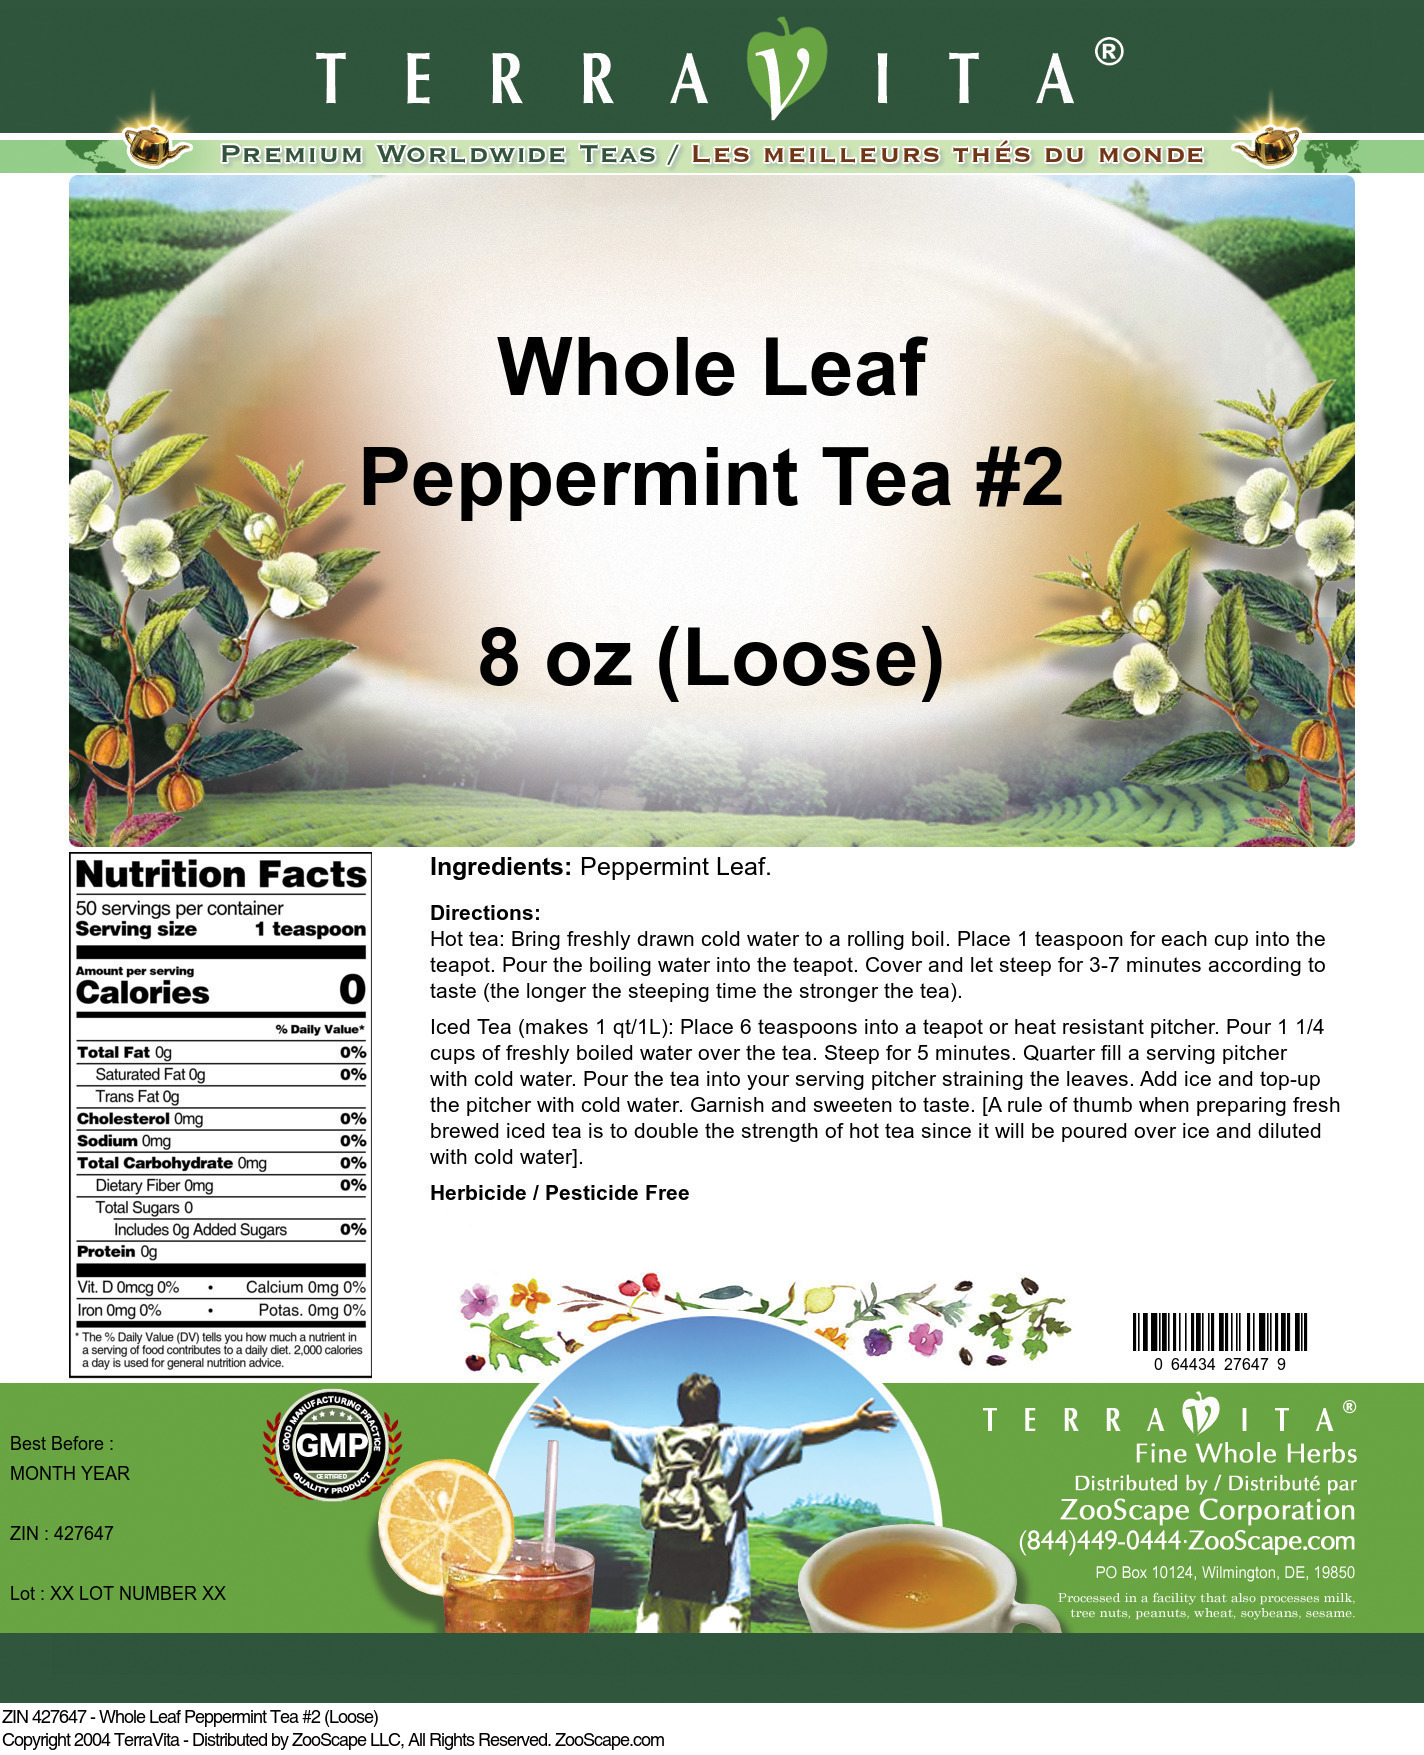 Whole Leaf Peppermint Tea #2 (Loose) - Label